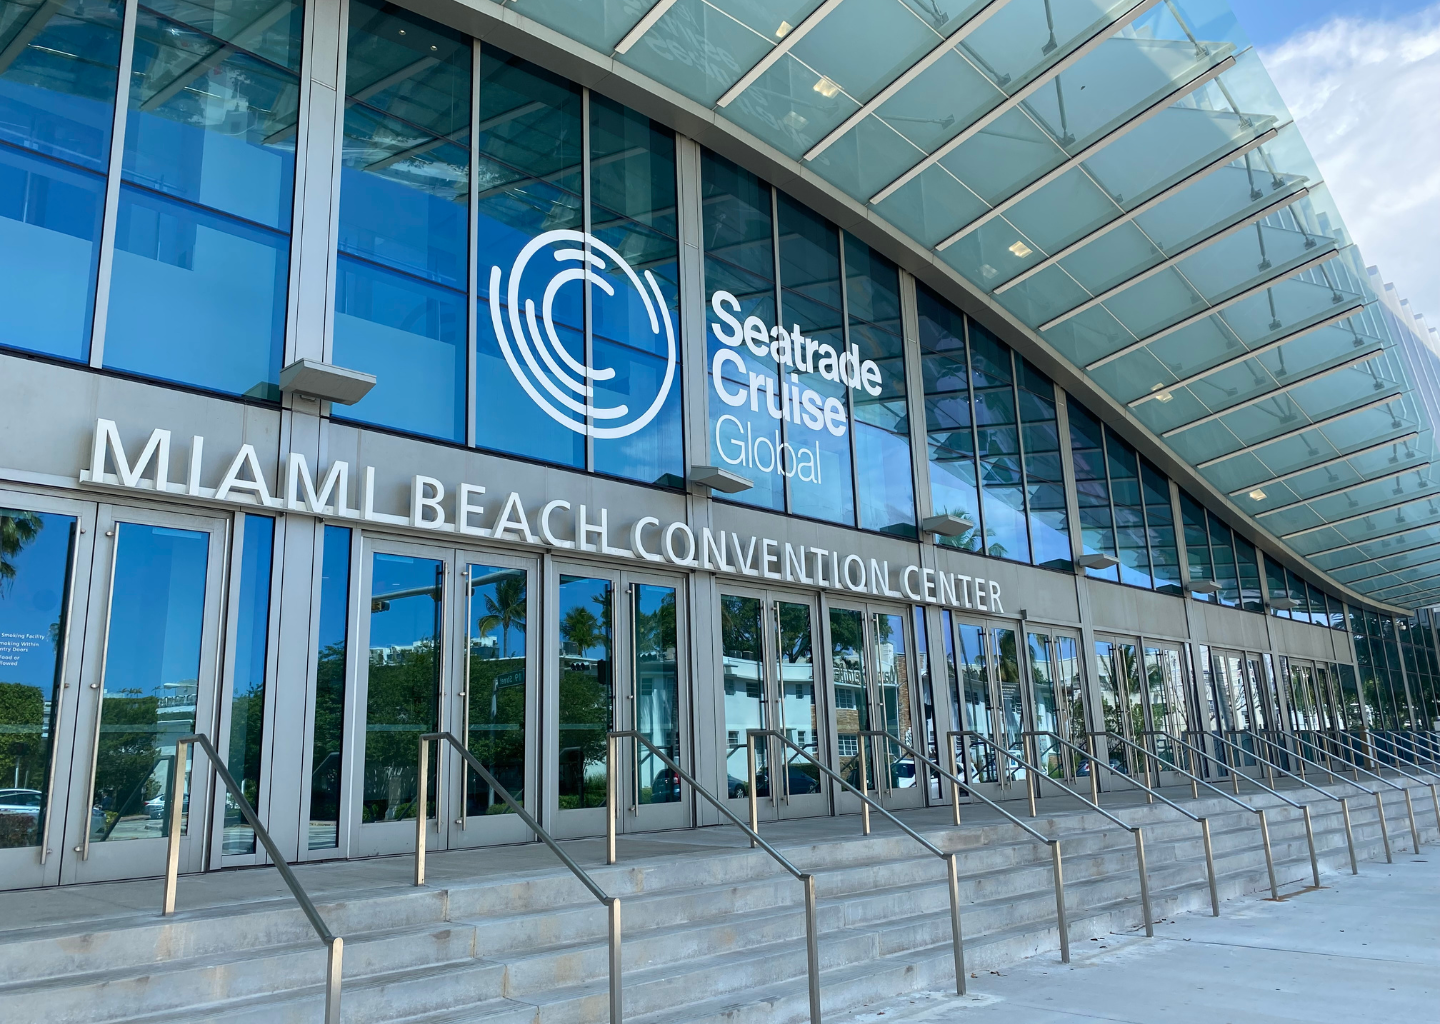 Miami Beach Convnetion Center